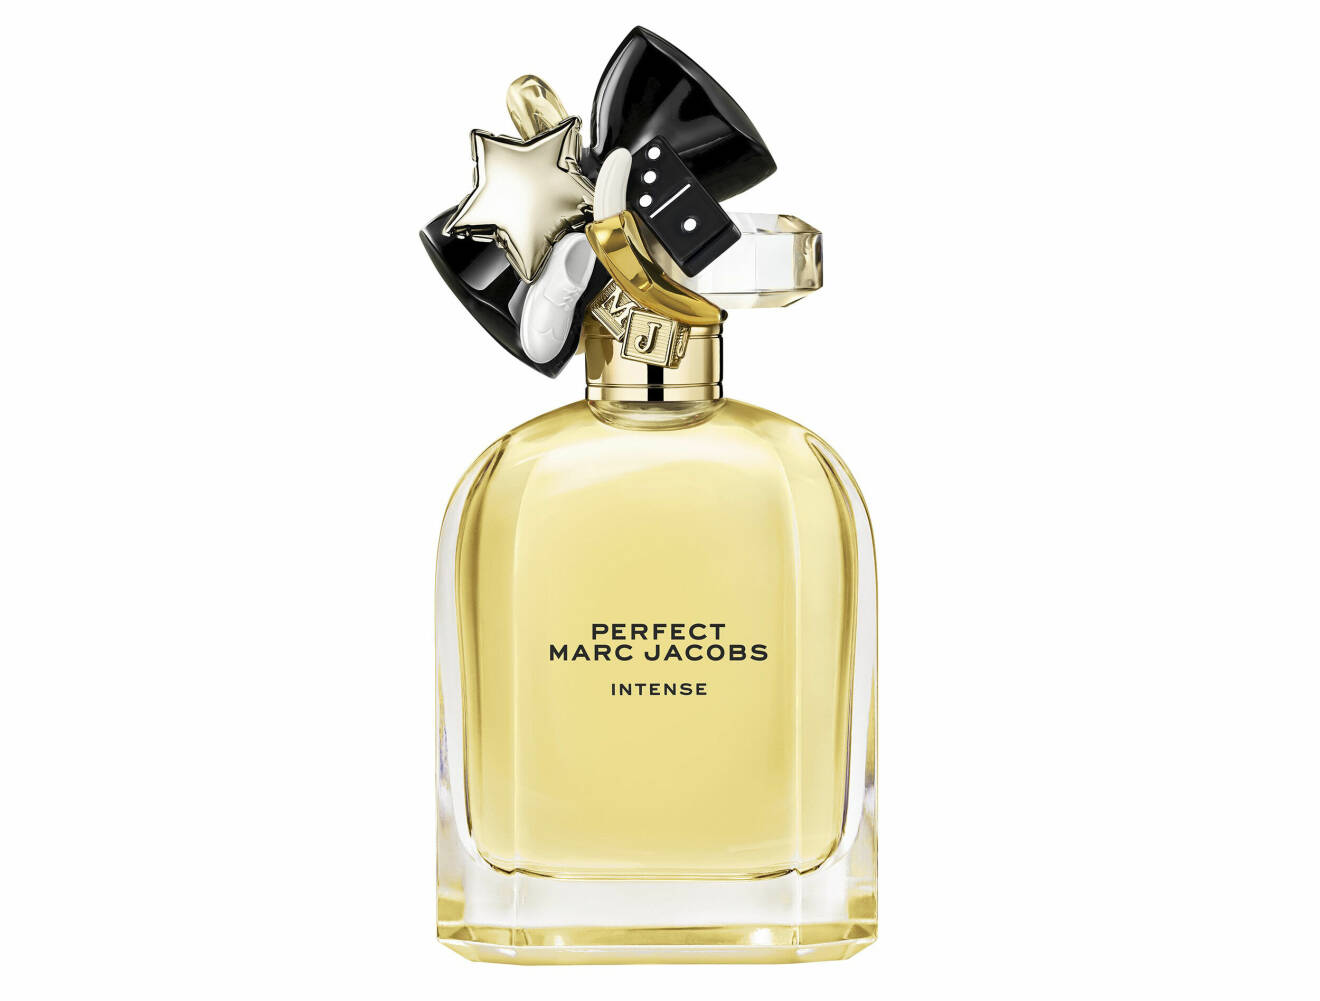 Parfymen Perfect intense från Marc Jacobs.